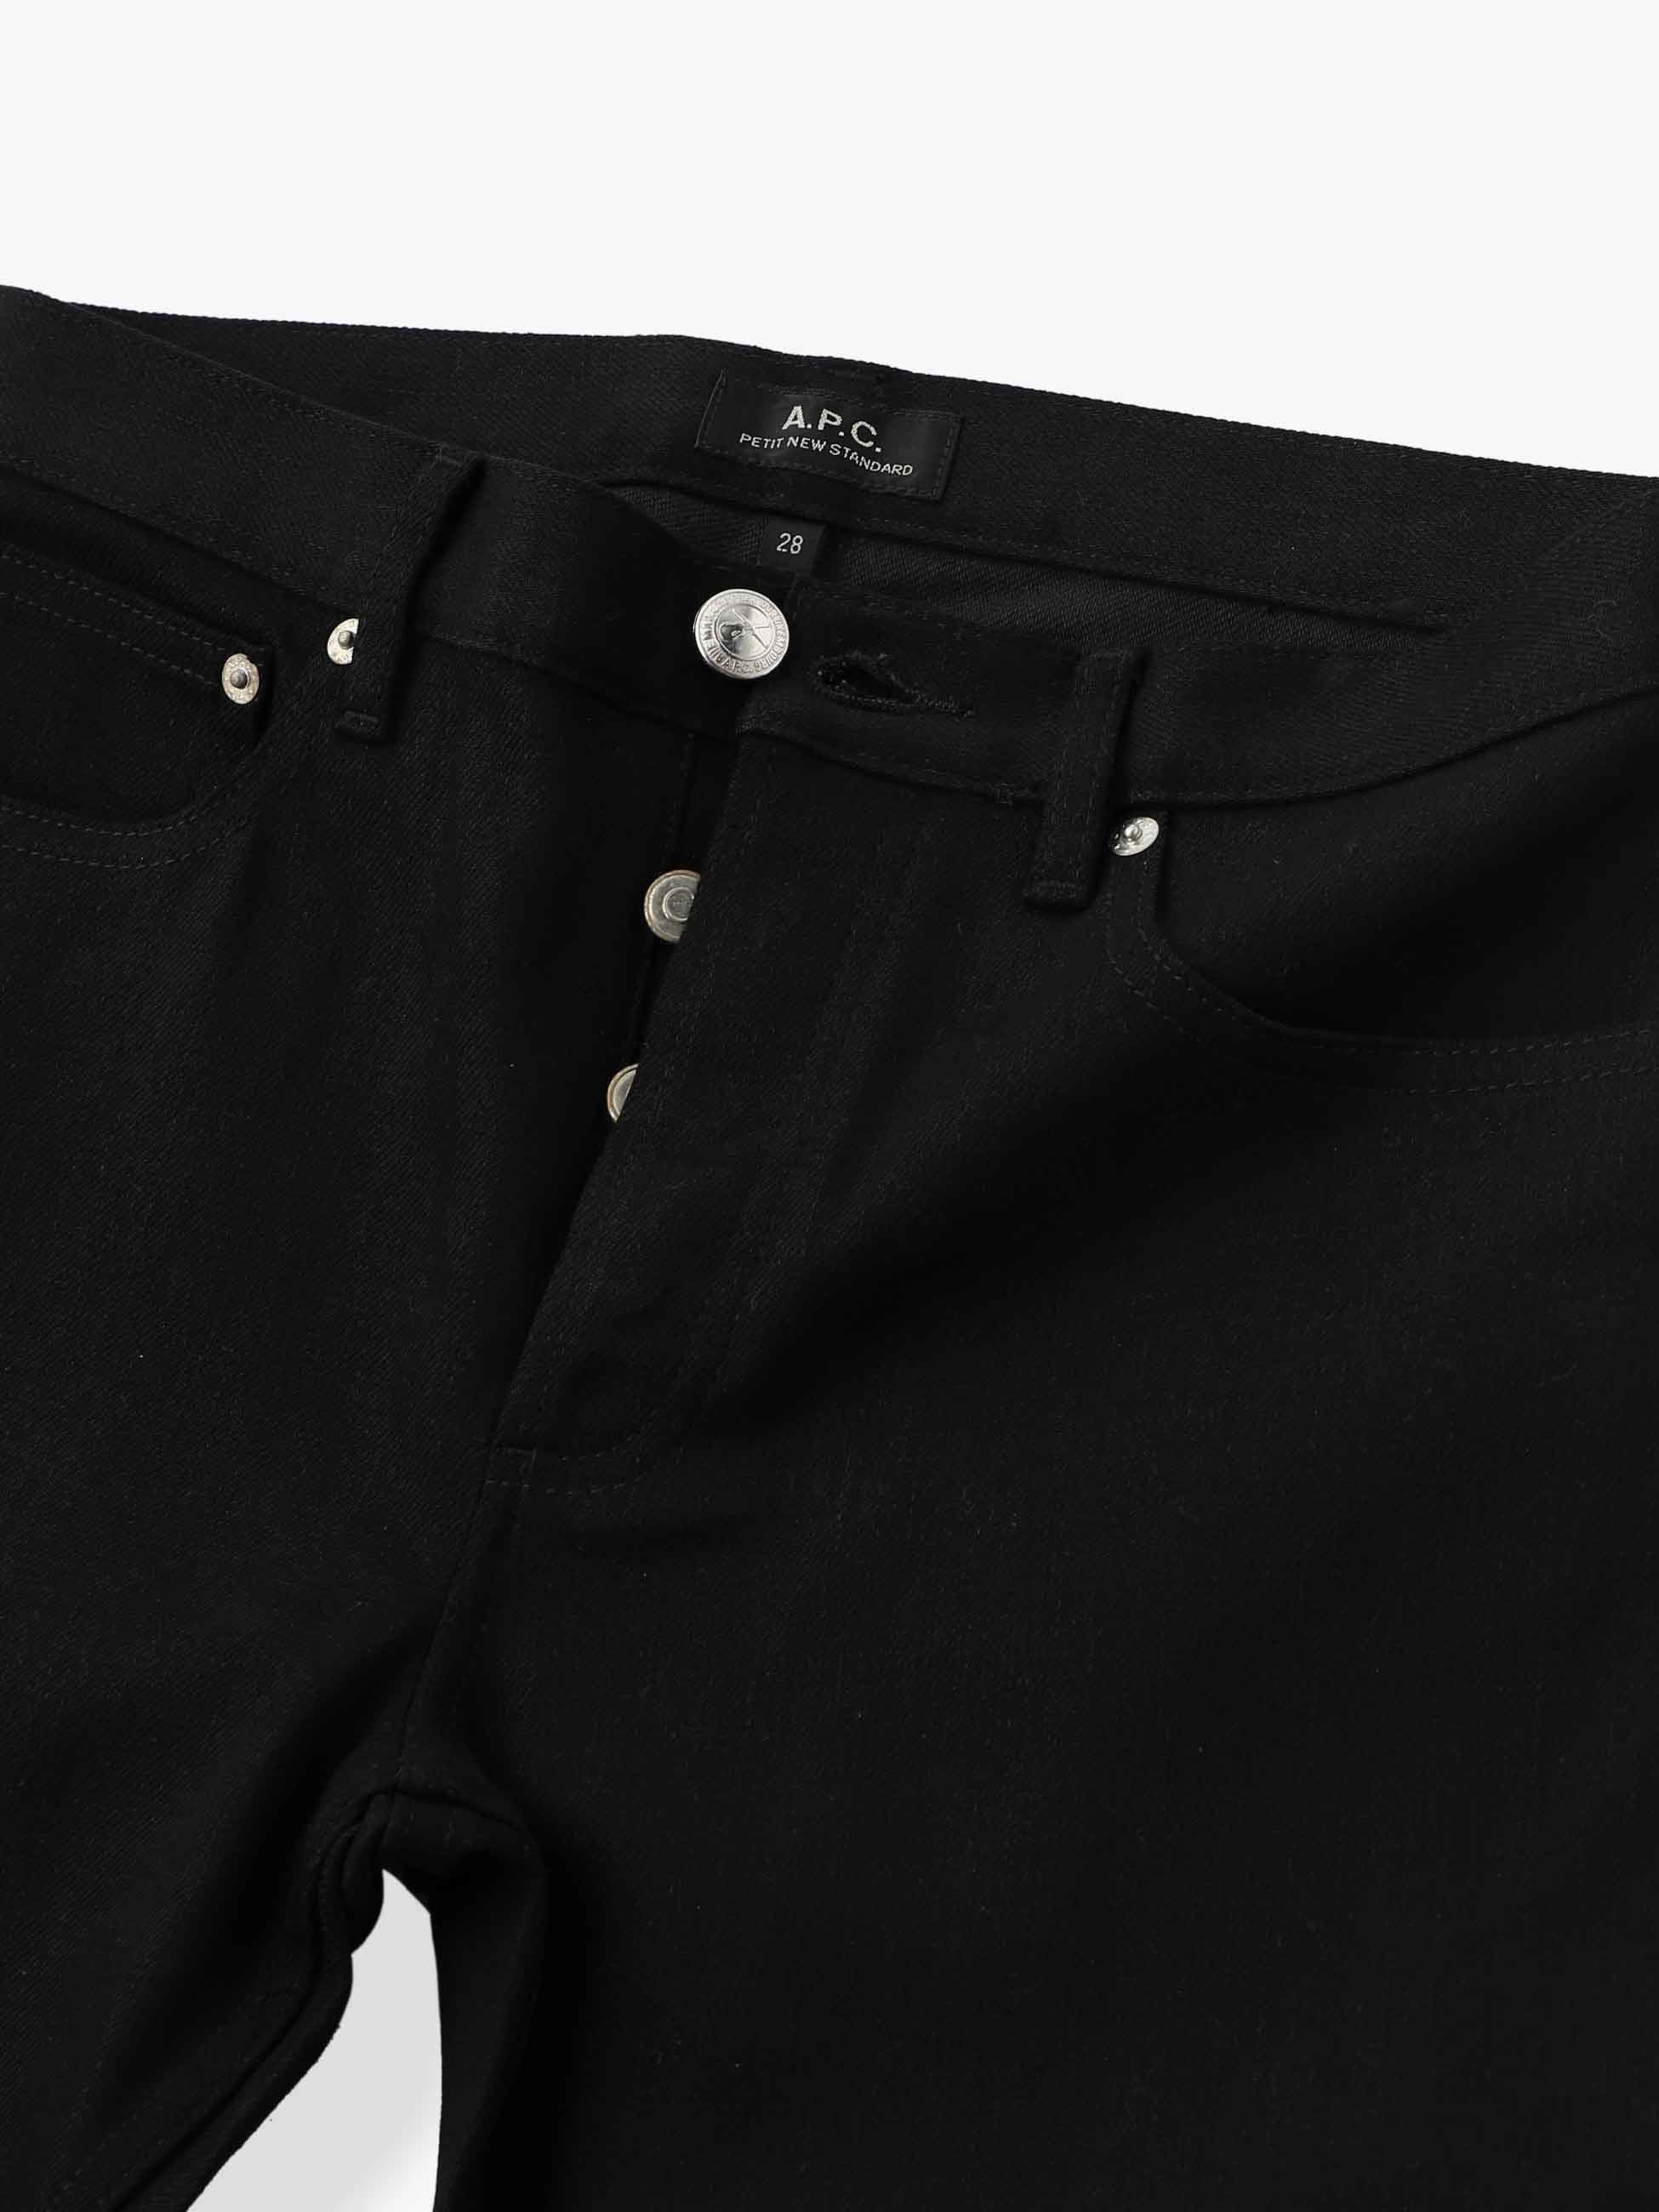 Petite New Standard Rigid Black Denim Pants